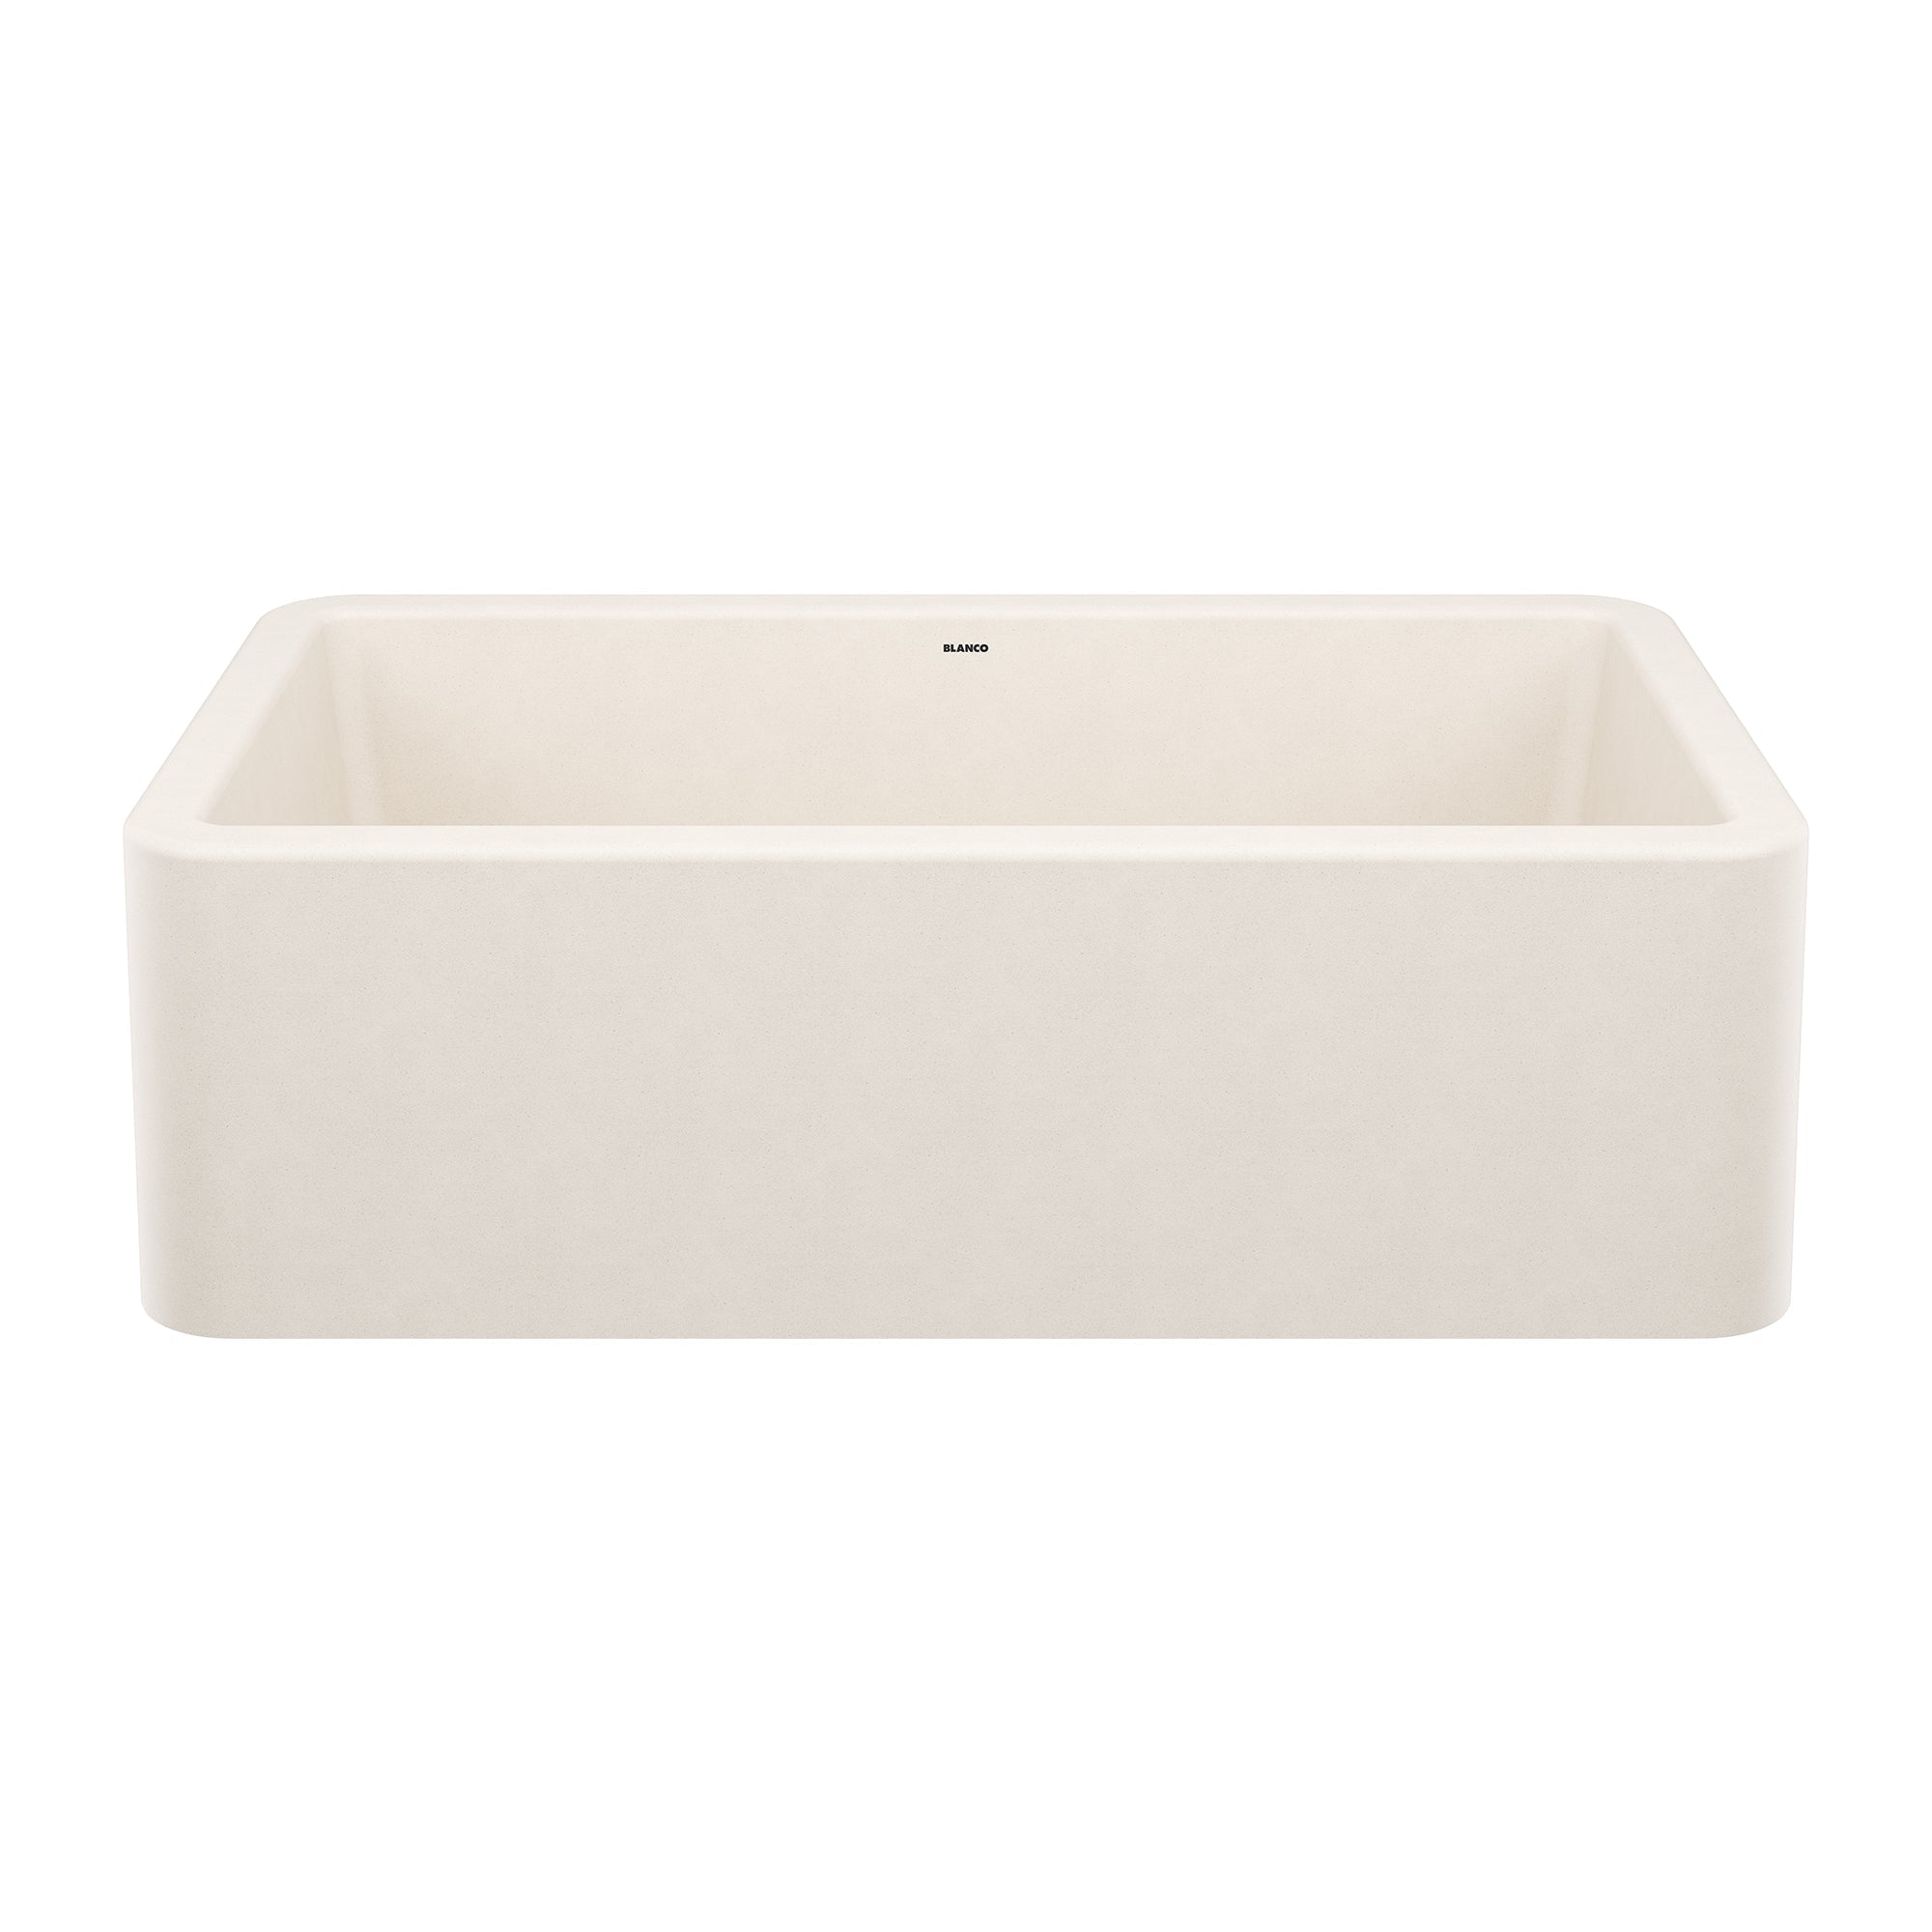 BLANCO Ikon 33" SILGRANIT Single Bowl Farmhouse Sink in Soft White